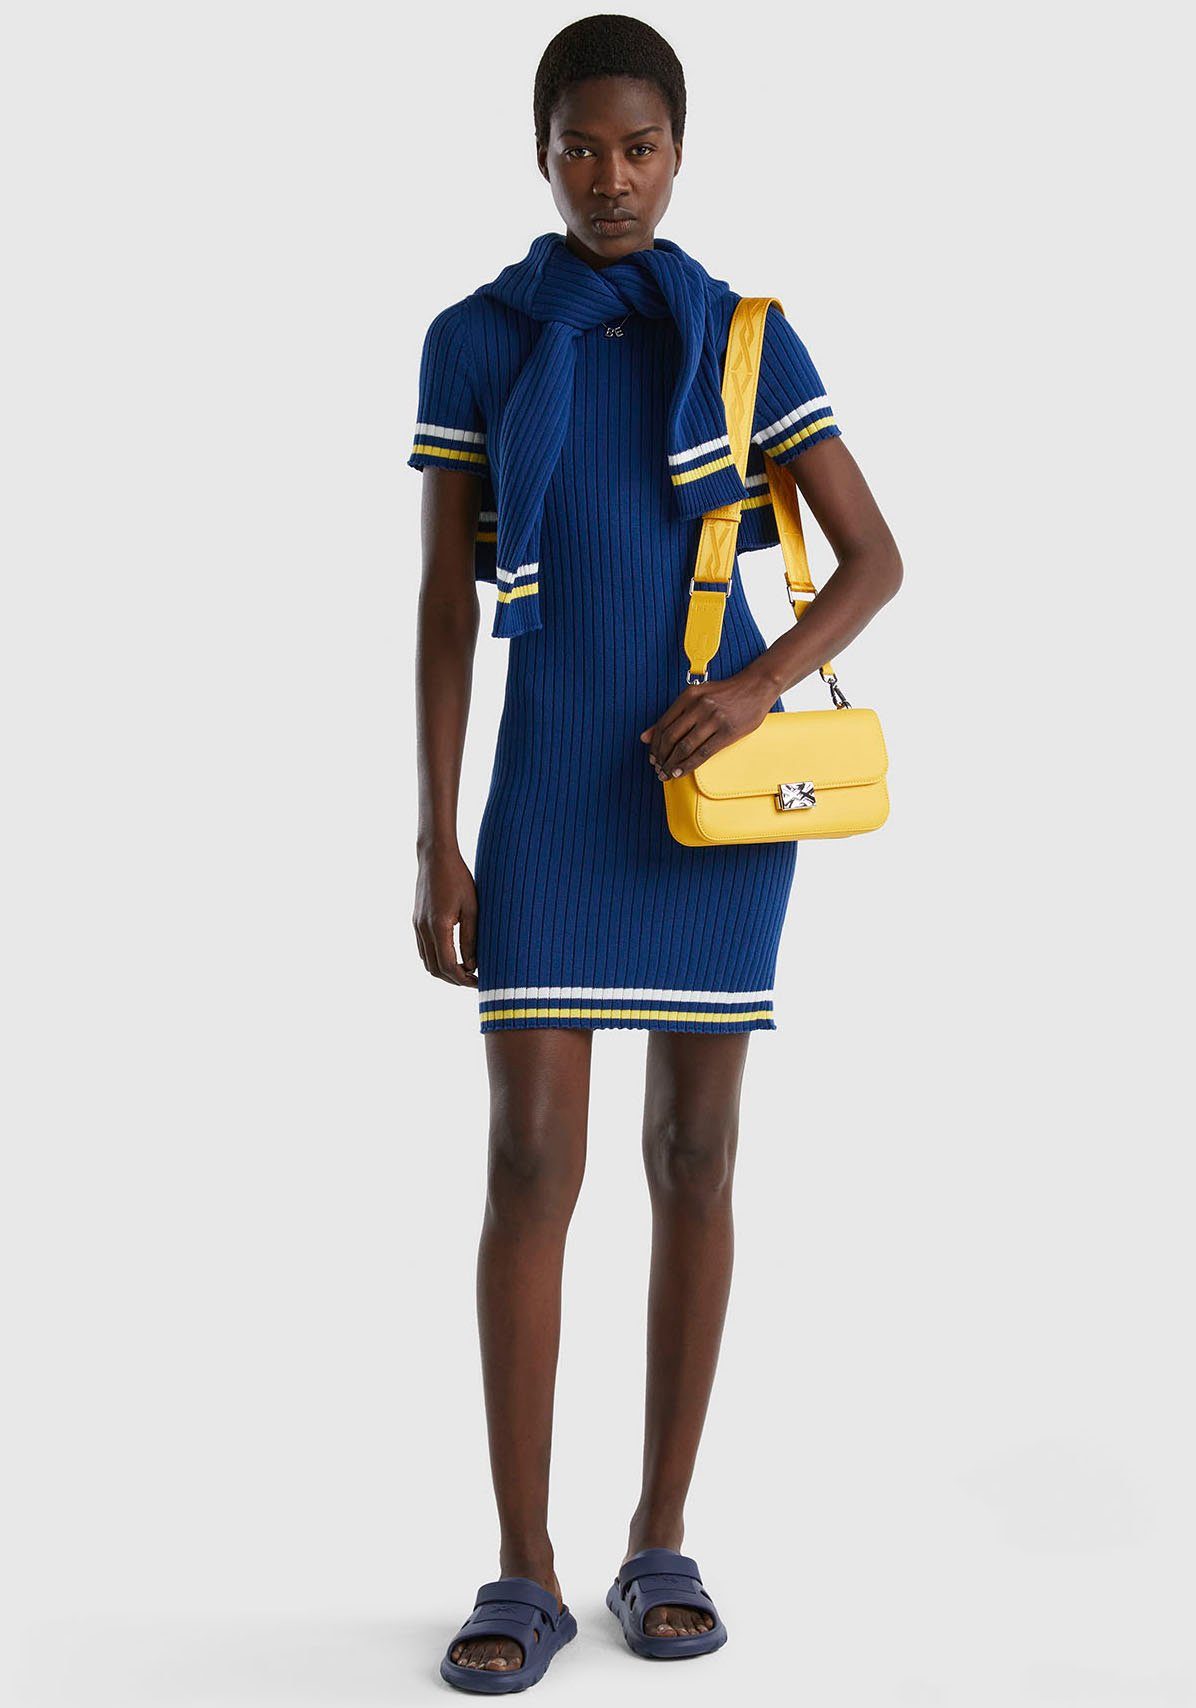 Blozend Wegversperring Avondeten United Colors of Benetton Jurken kopen? Bestel je favoriete jurk online |  OTTO